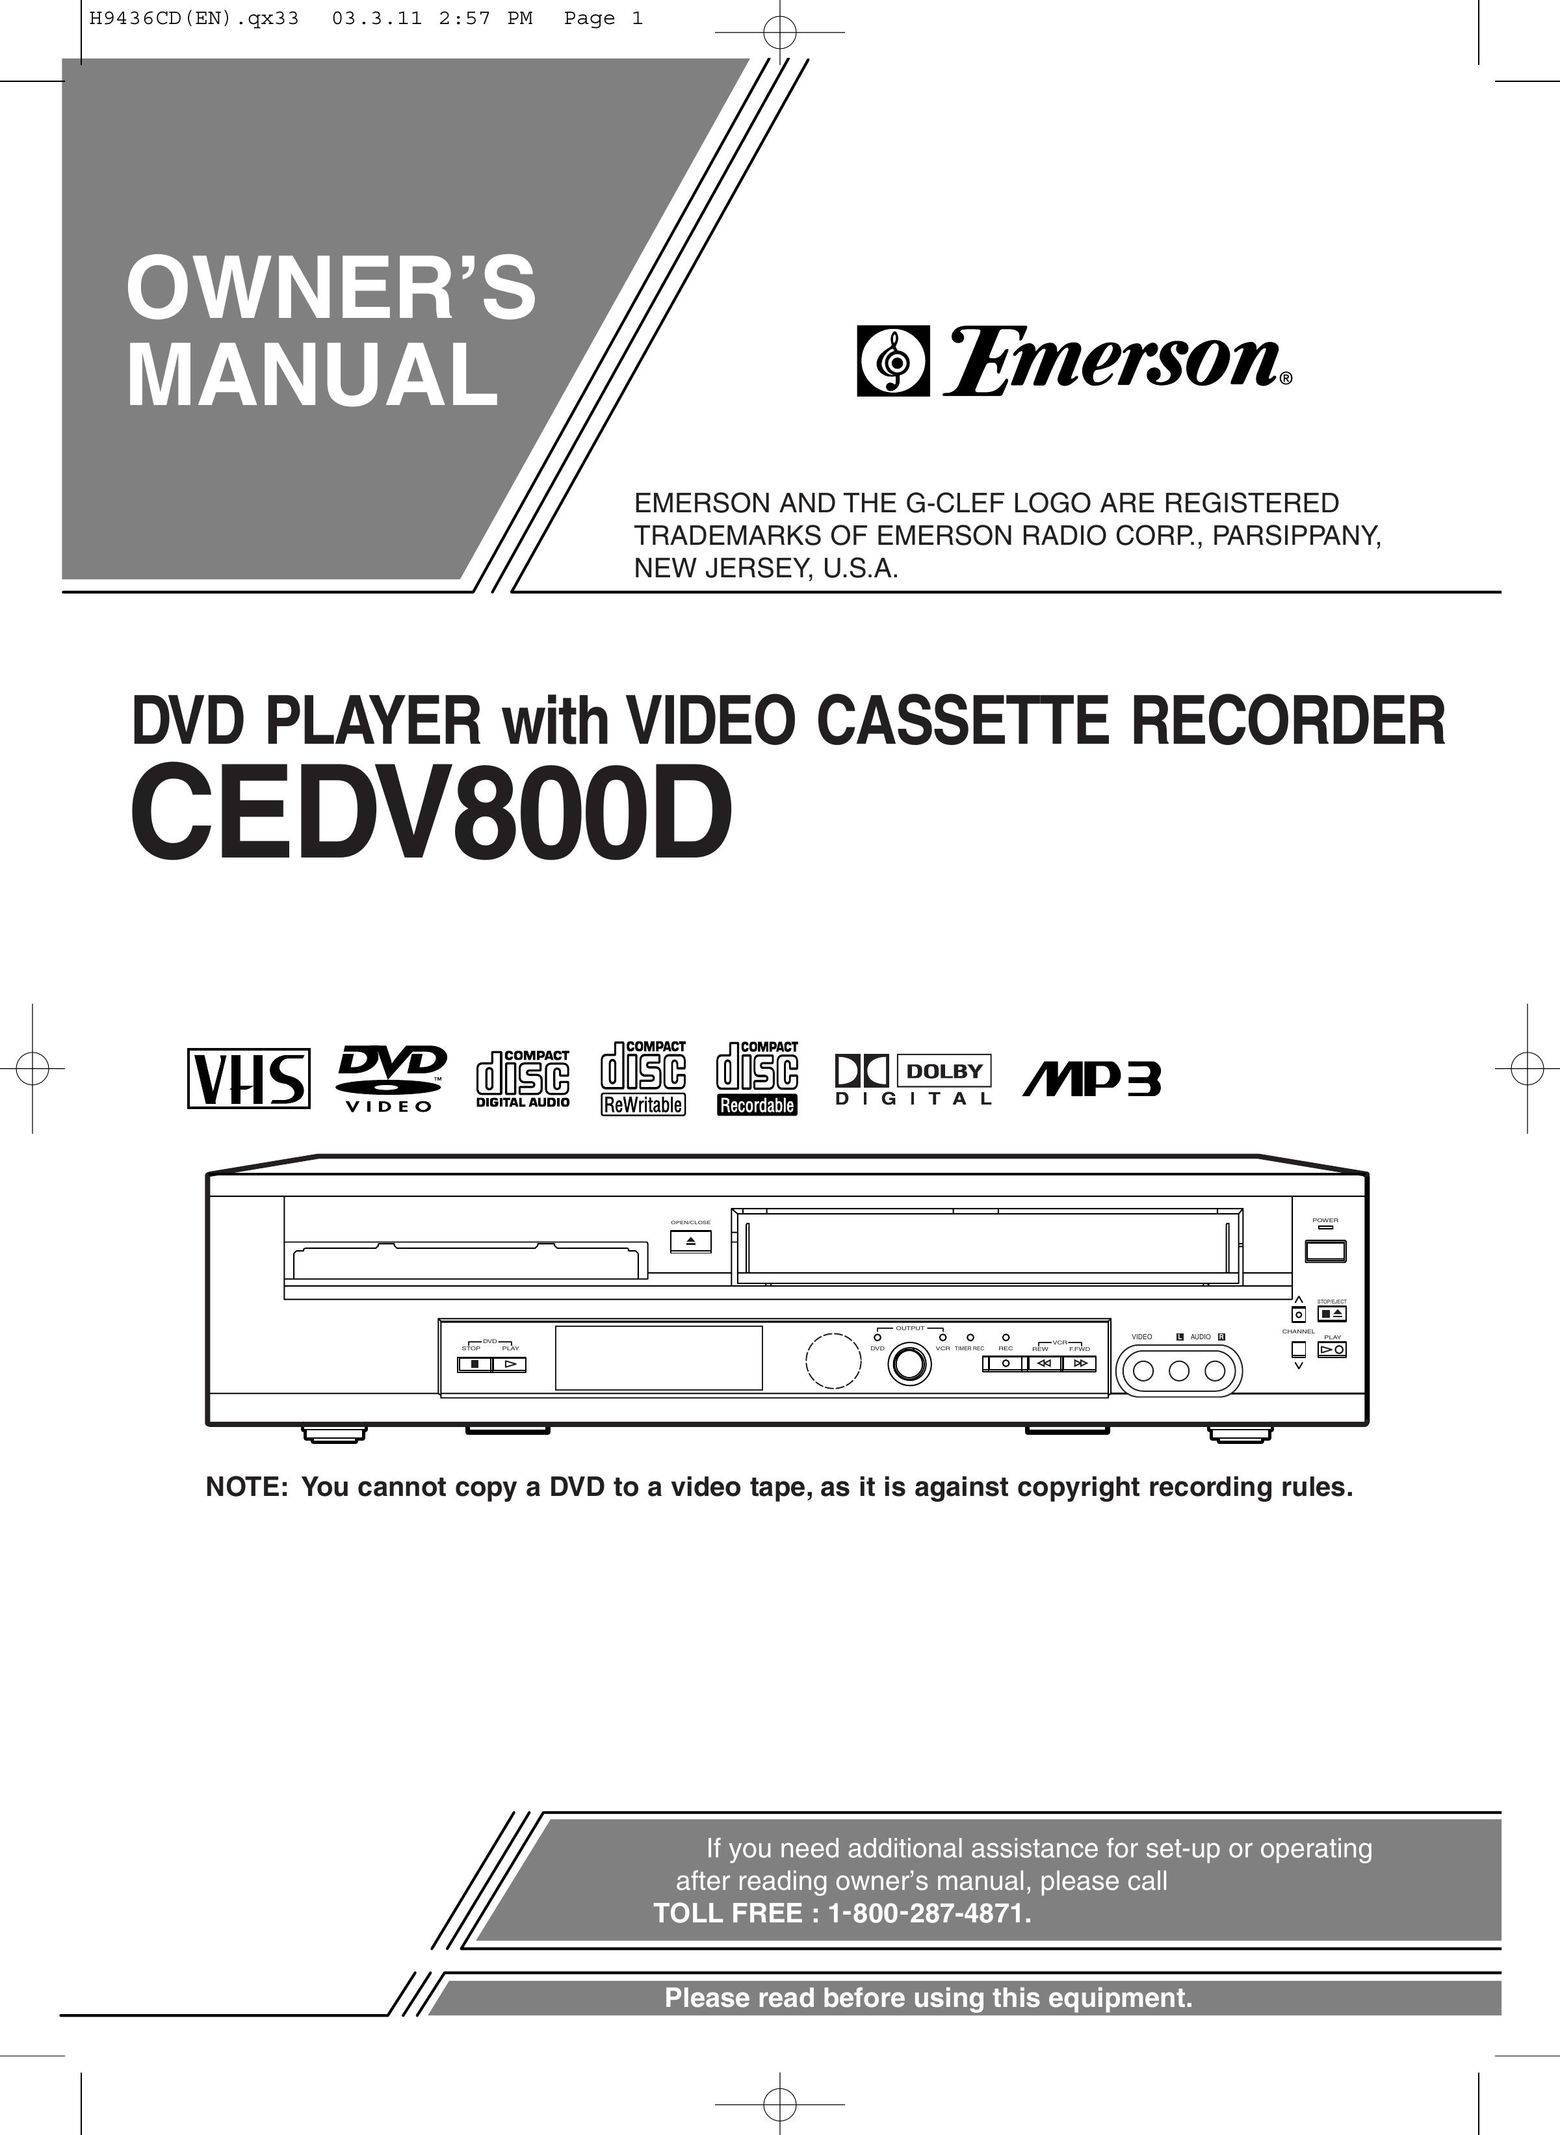 Emerson CEDV800D DVD VCR Combo User Manual